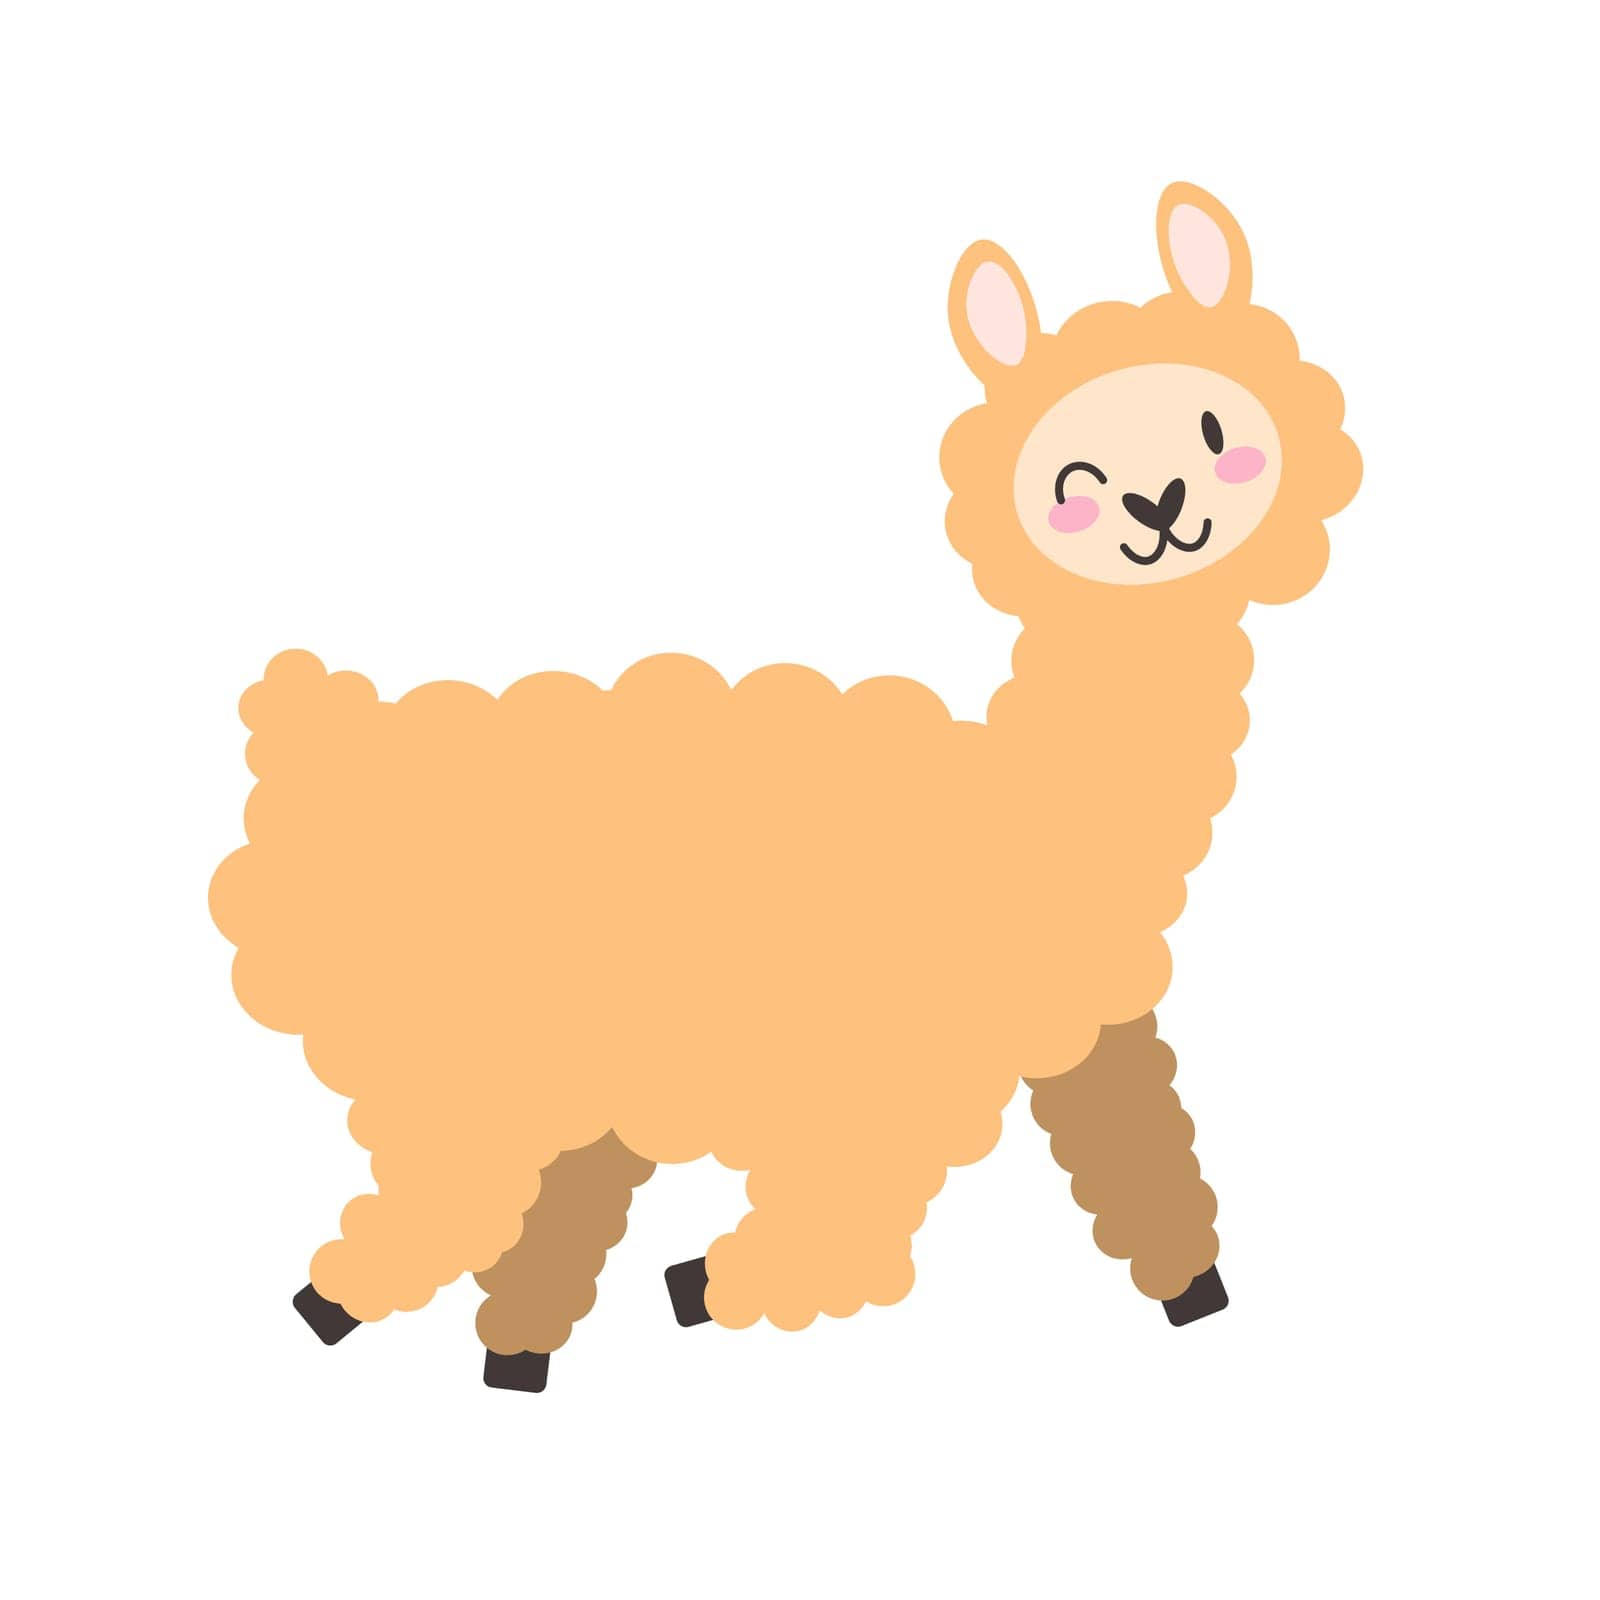 Cute fluffy llama isolated on a white background. Hand drawn alpaca flat vector illustration. Nursery decoration. Stock vector illustration isolated on white background. EPS by Alxyzt